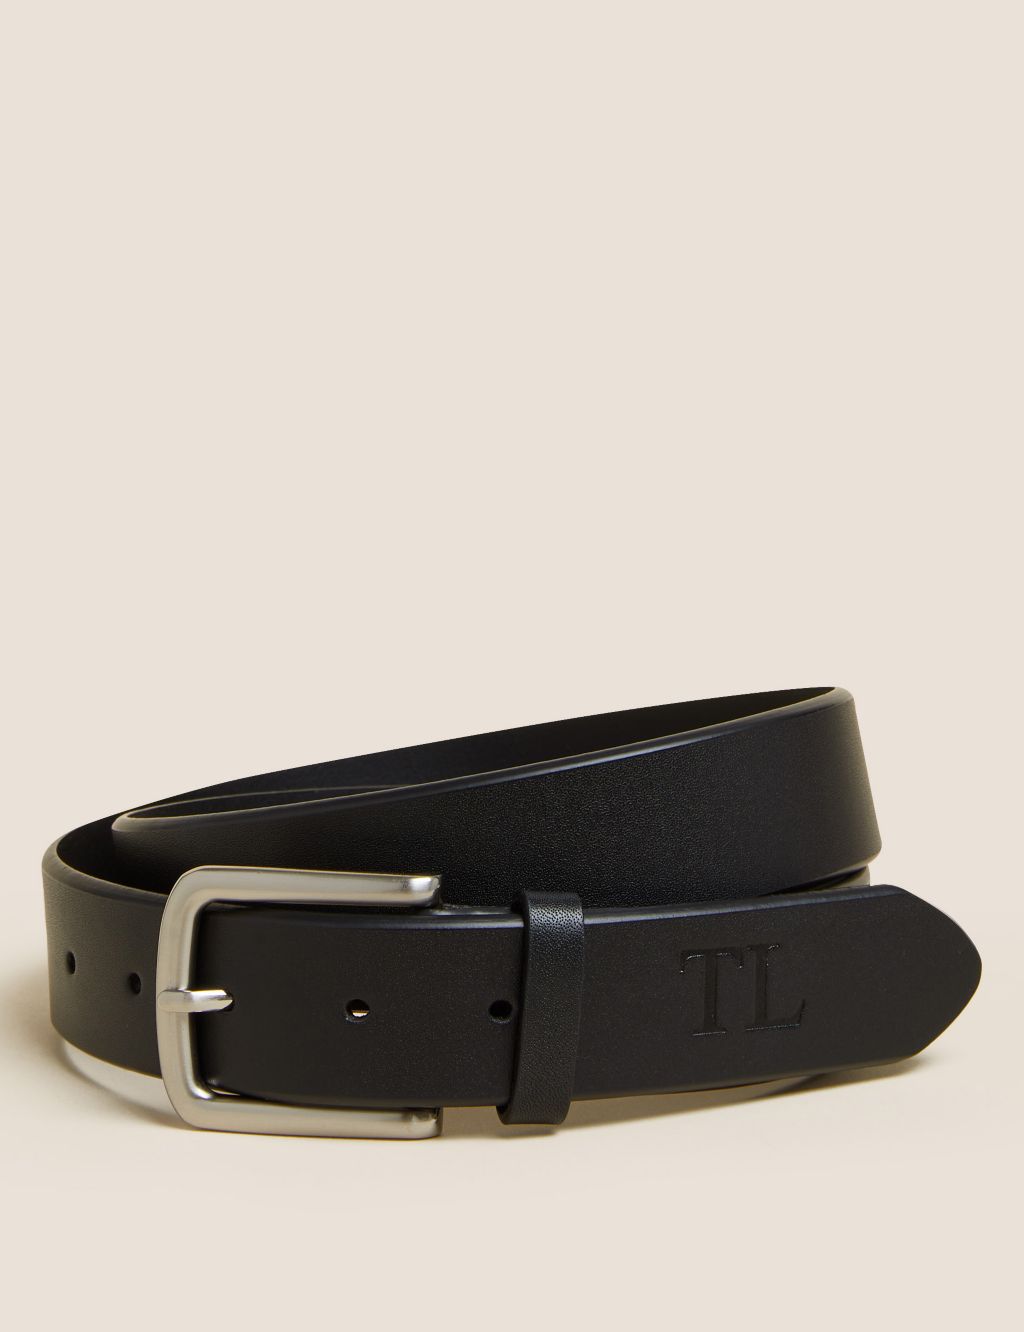 Personalised Leather Belt image 1